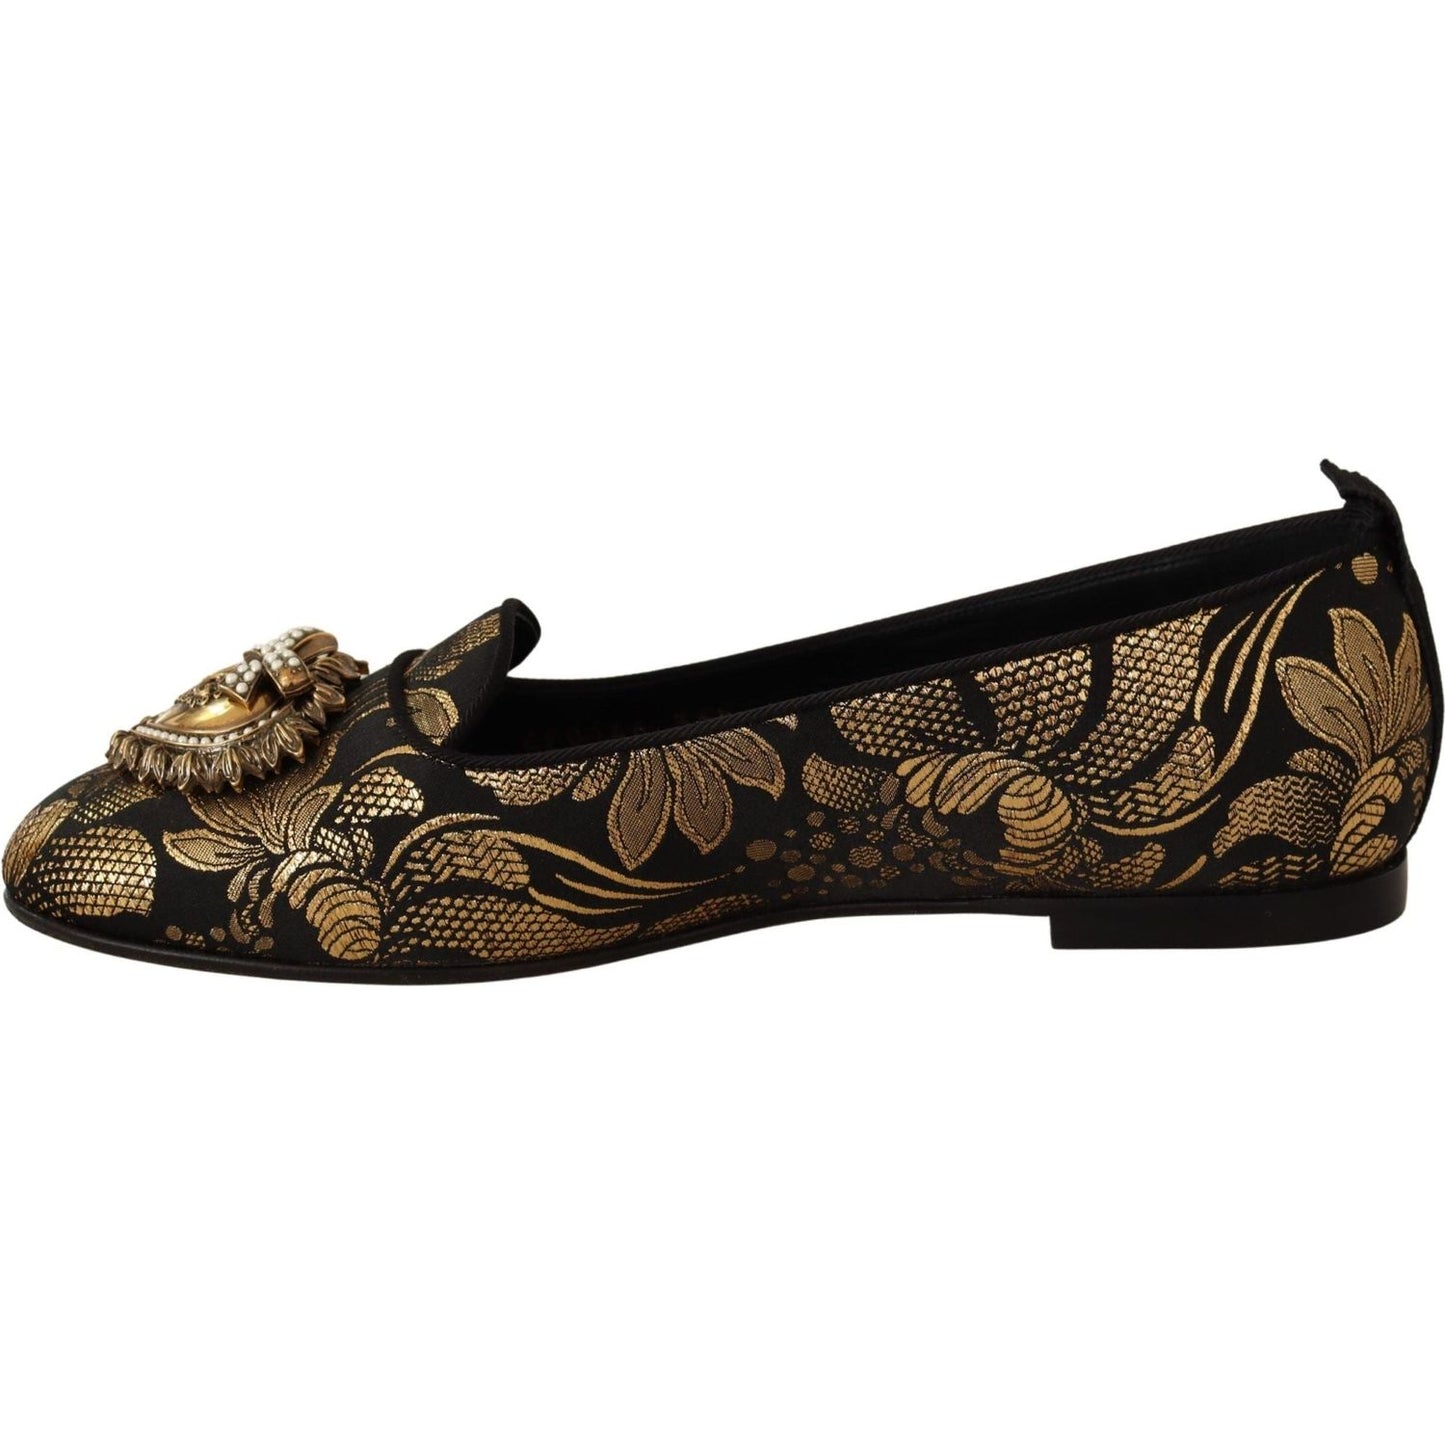 Dolce & Gabbana Elegant Leather Heart Embellished Flats black-gold-amore-heart-loafers-flats-shoes